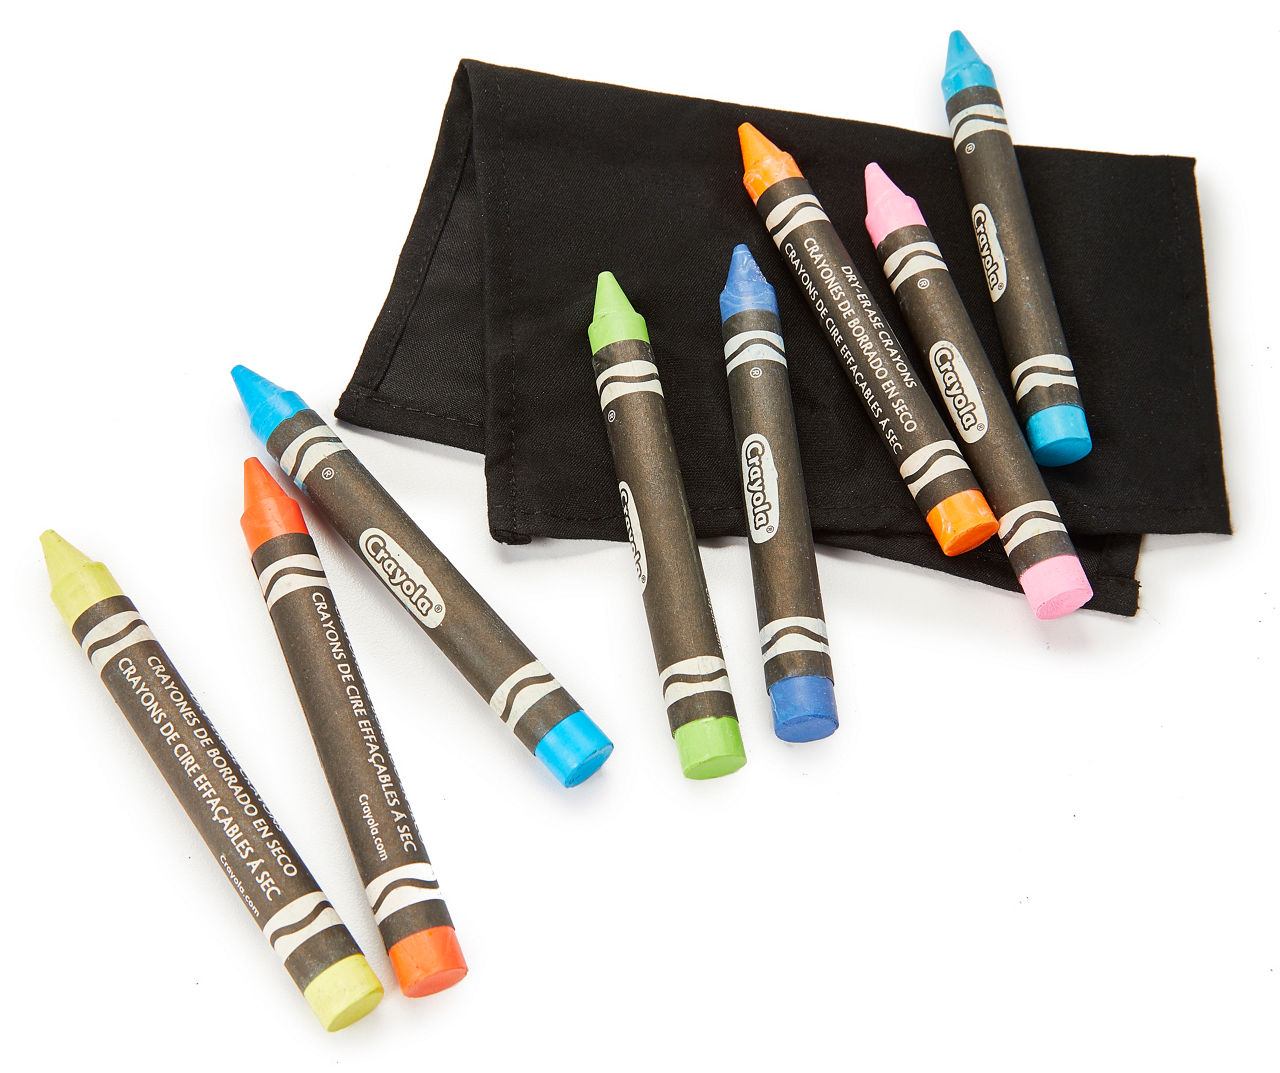 Dry Erase Neon Crayons, 8-Count